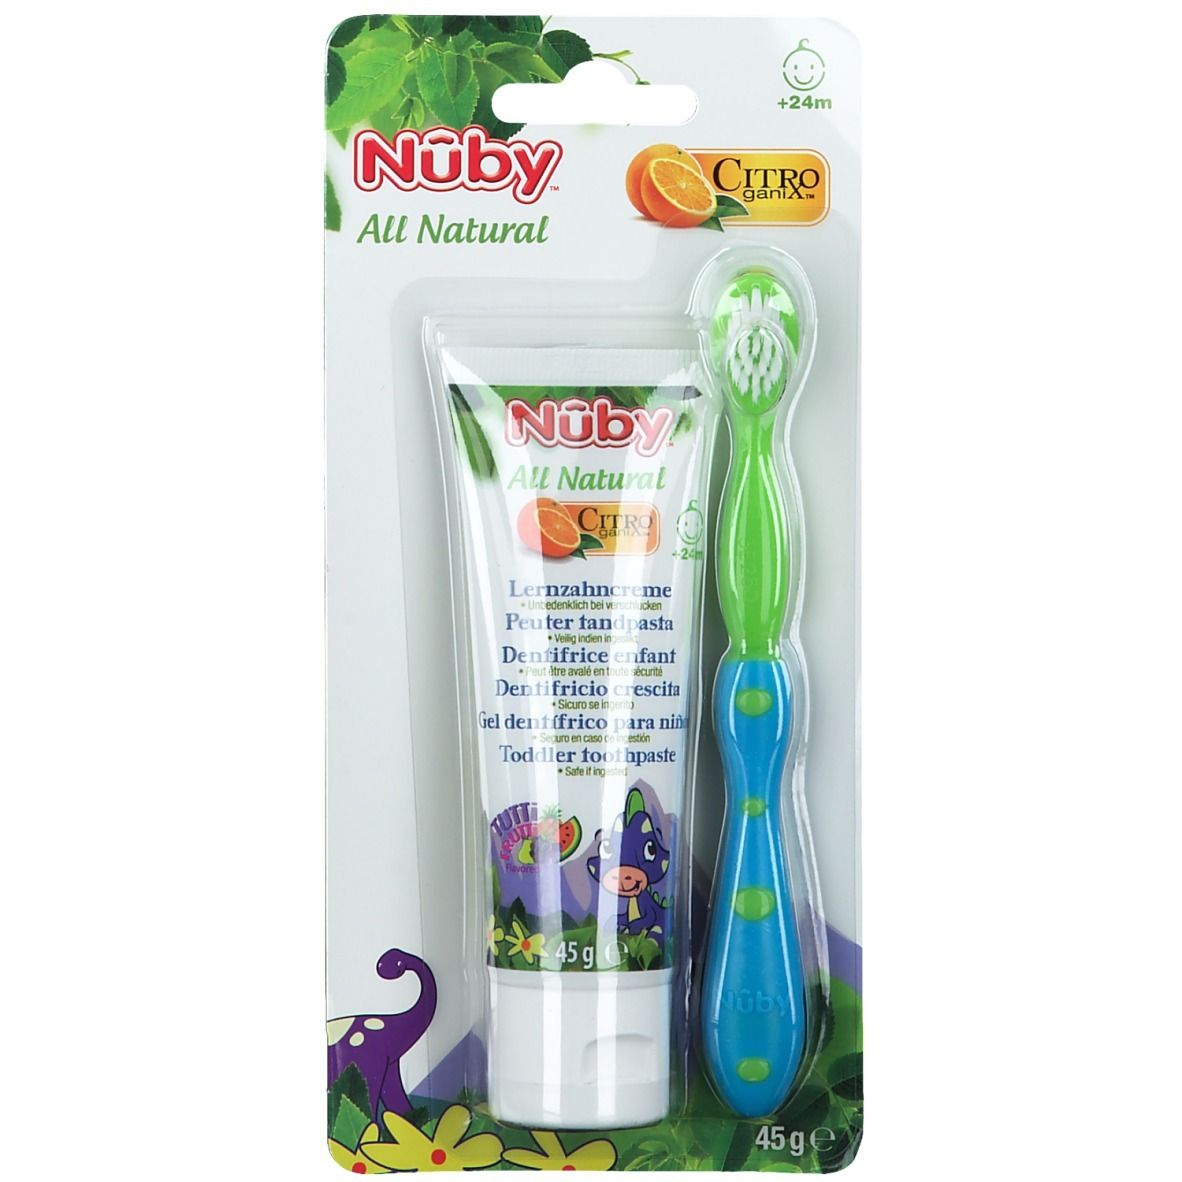 Nuby Citroganix Toothpaste 45g + Toothbrush PROMO